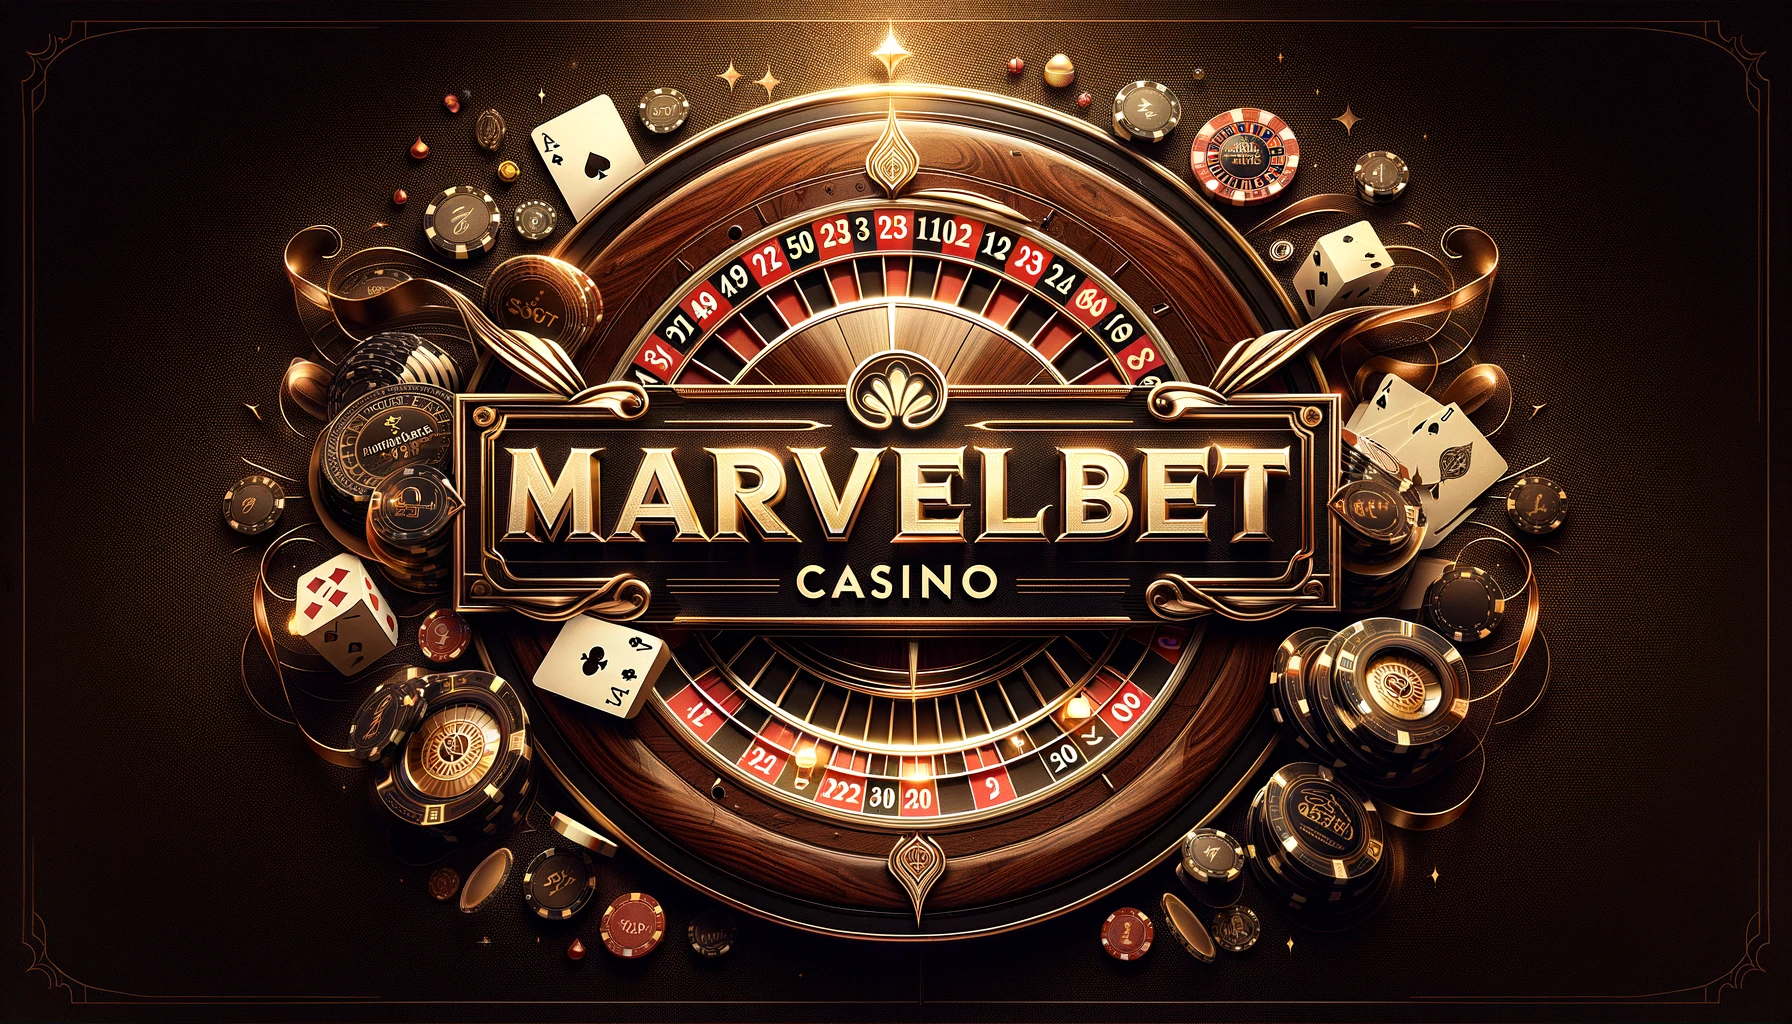 MarvelBet Casino Mobile App: Your Pocket-Sized Casino Adventure